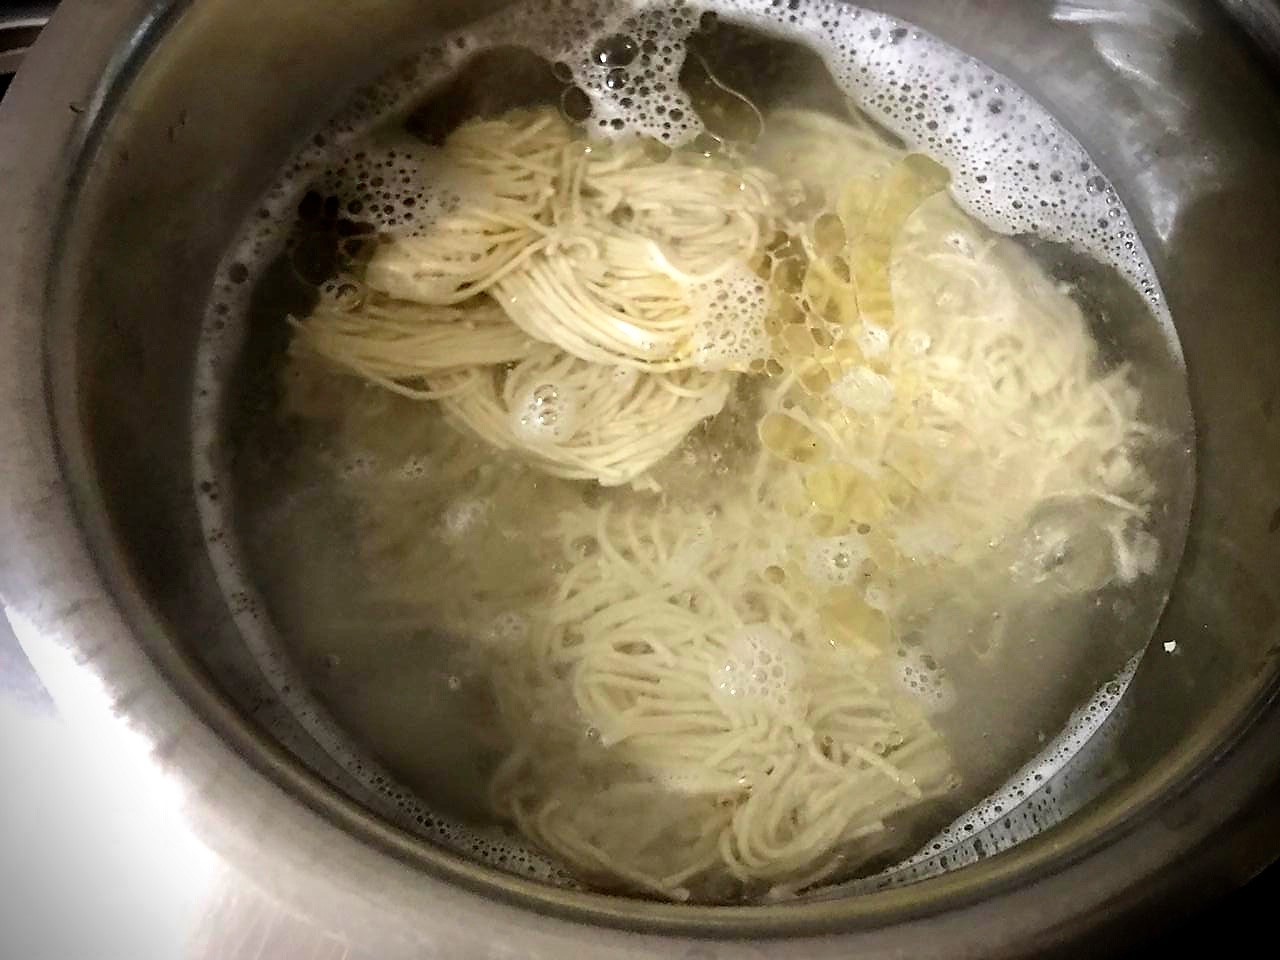 Hakka Noodles Recipe